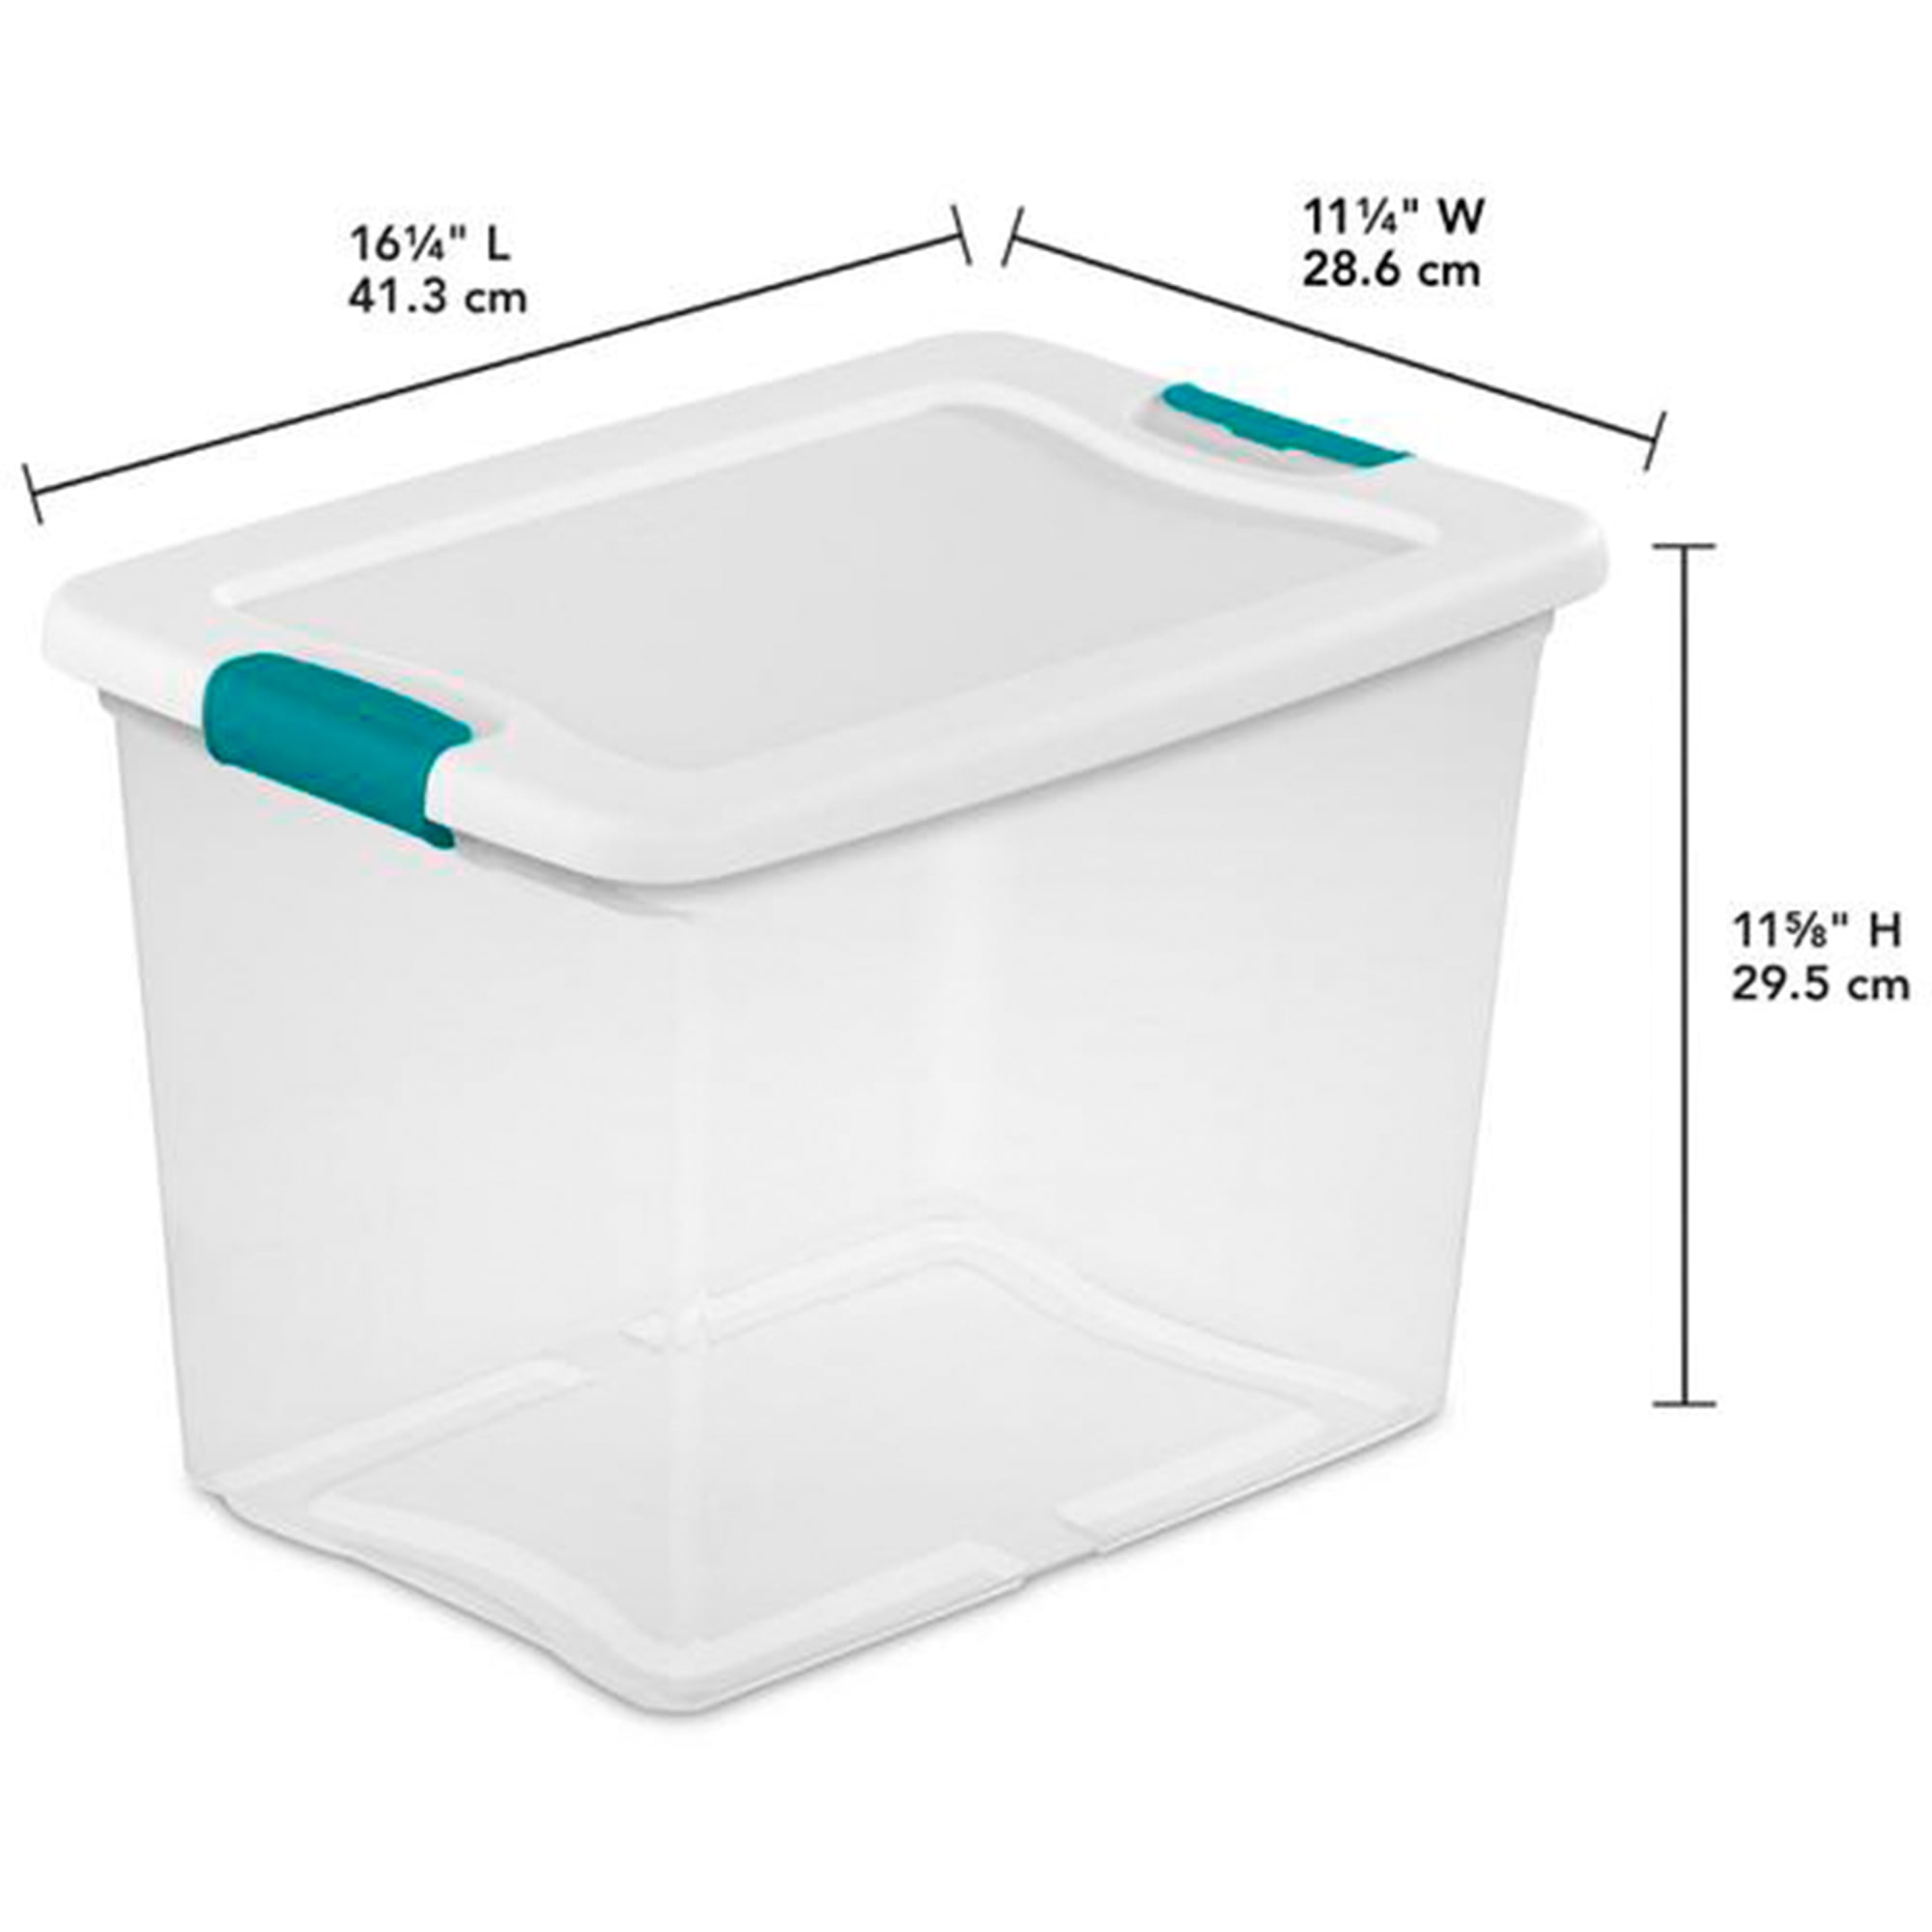 Sterilite 25 Quart Capacity Clear Storage Tote w/ Secure Latch Handles (6 Pack) - 1